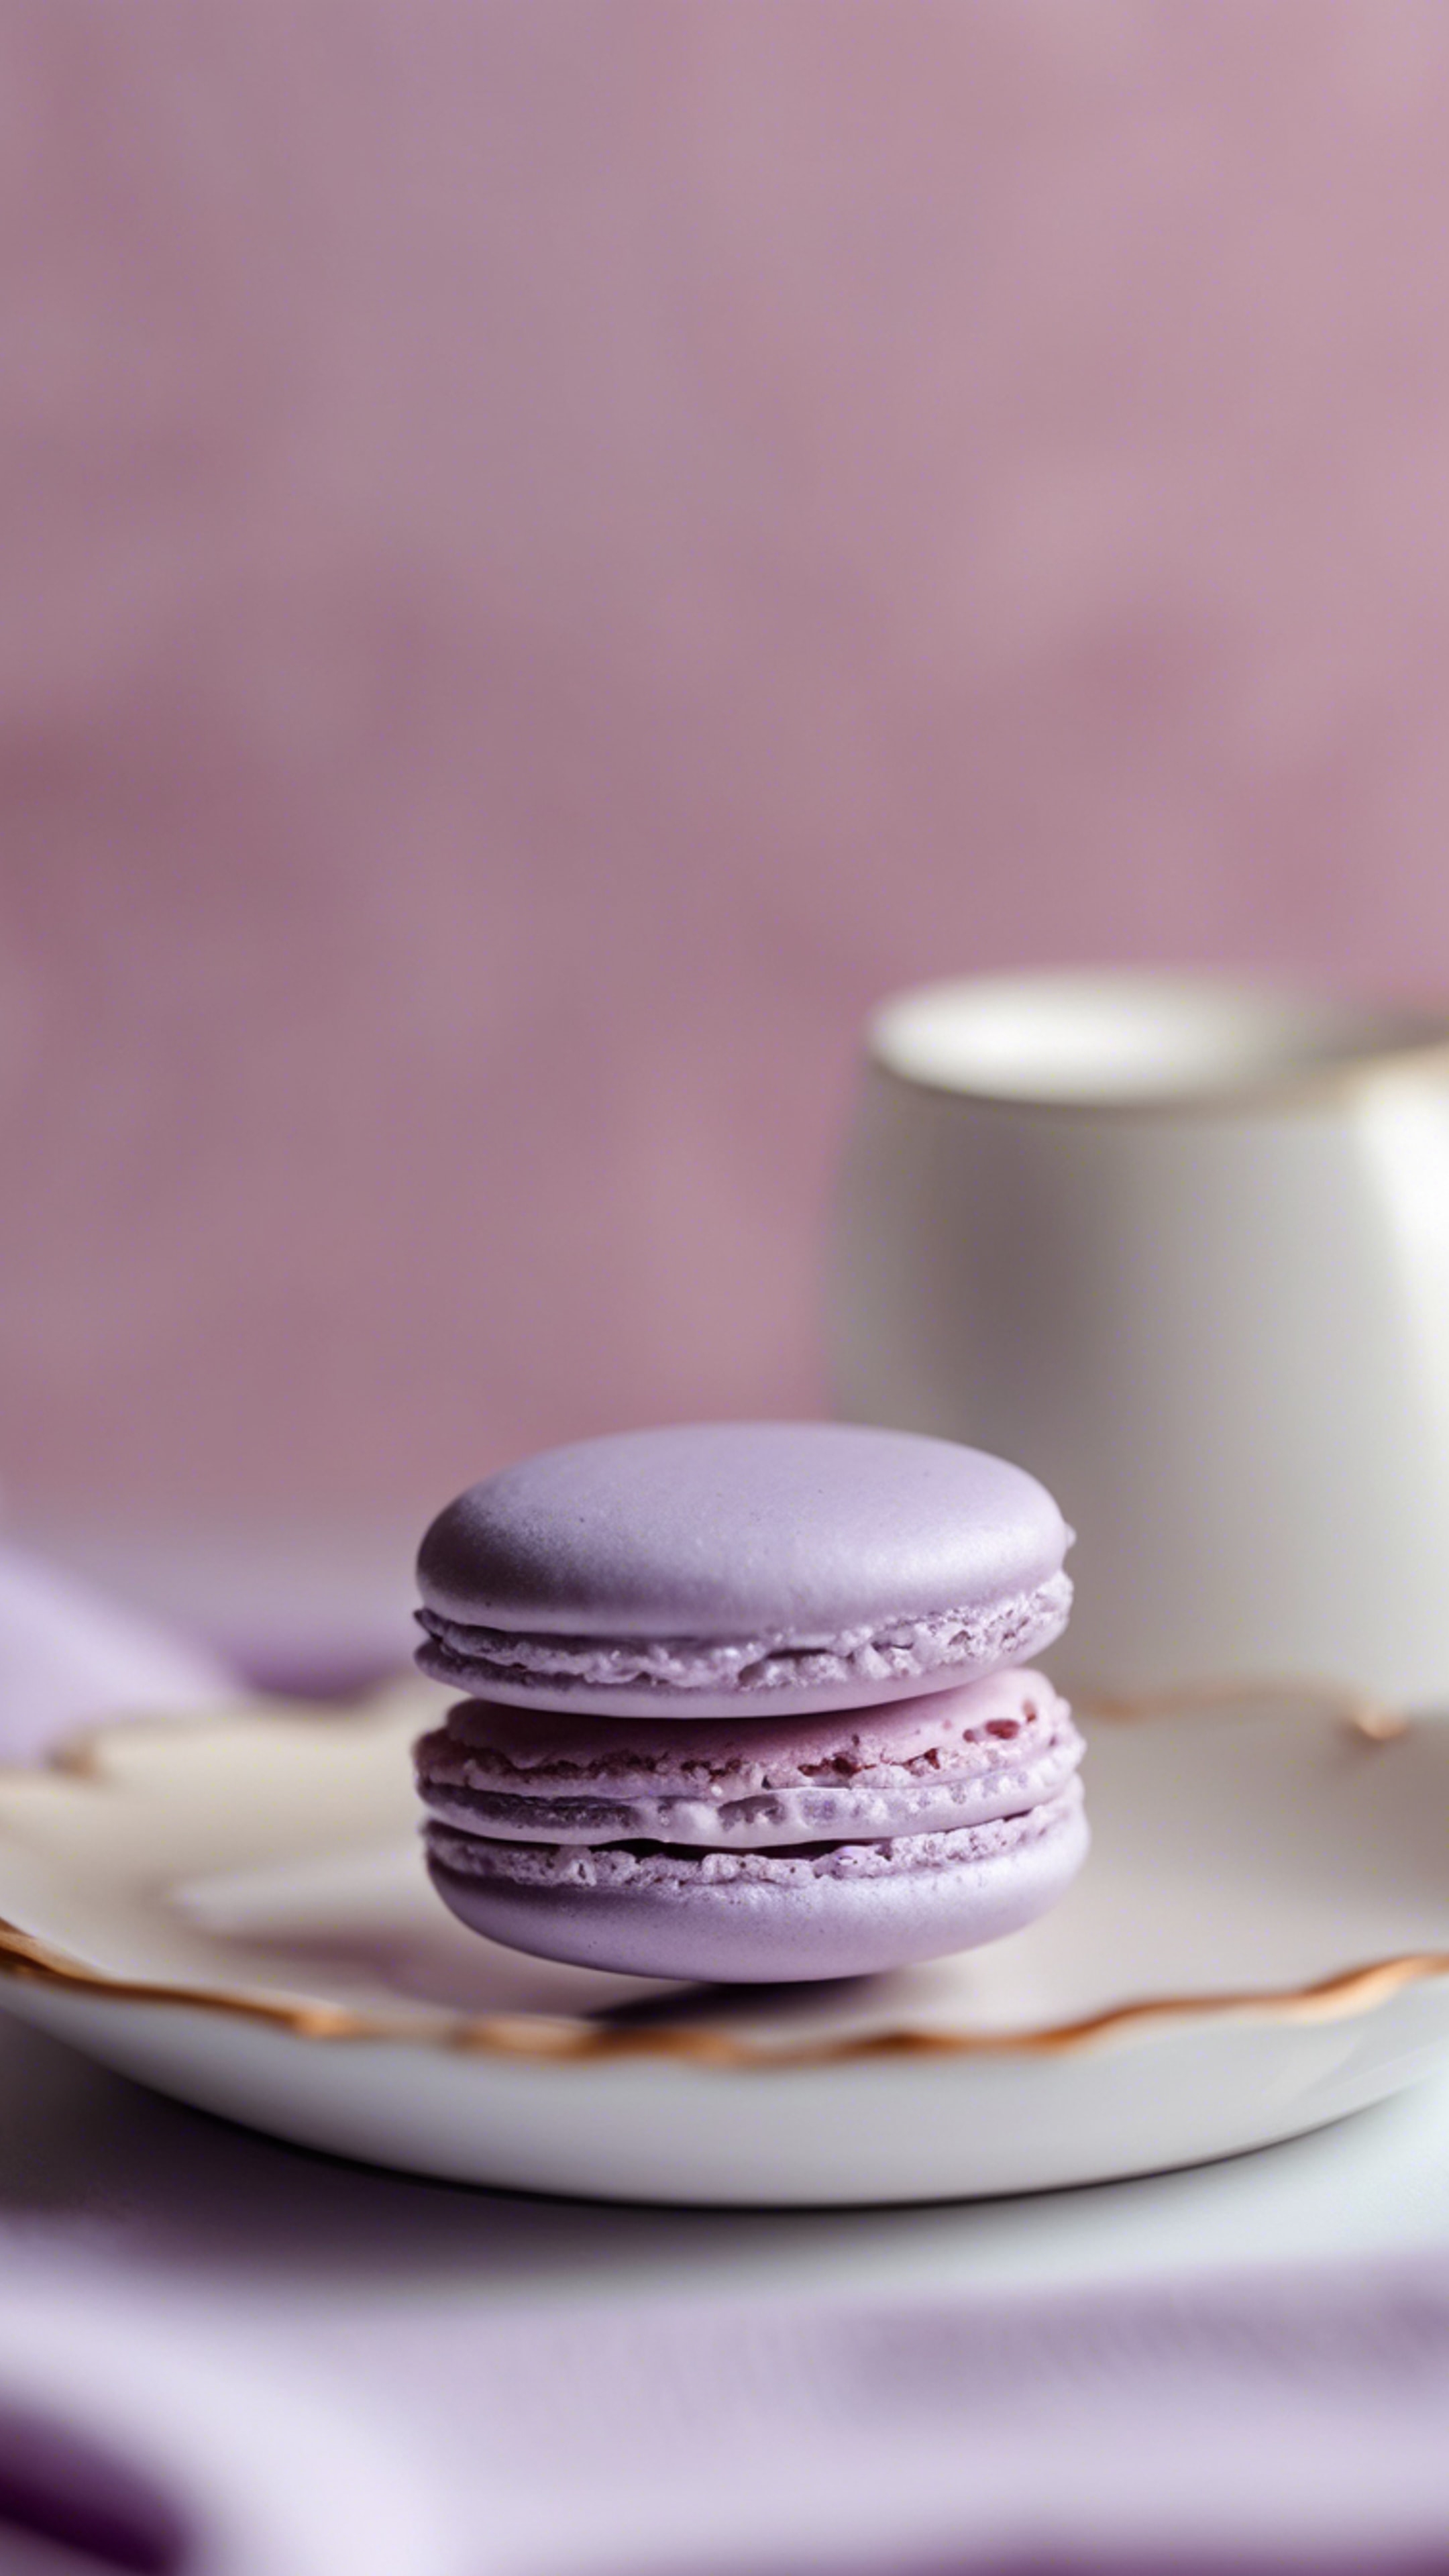 A close-up of a pastel purple-hued french macaron on a white porcelain plate. Sfondo[867427dfb4584ec3b53c]